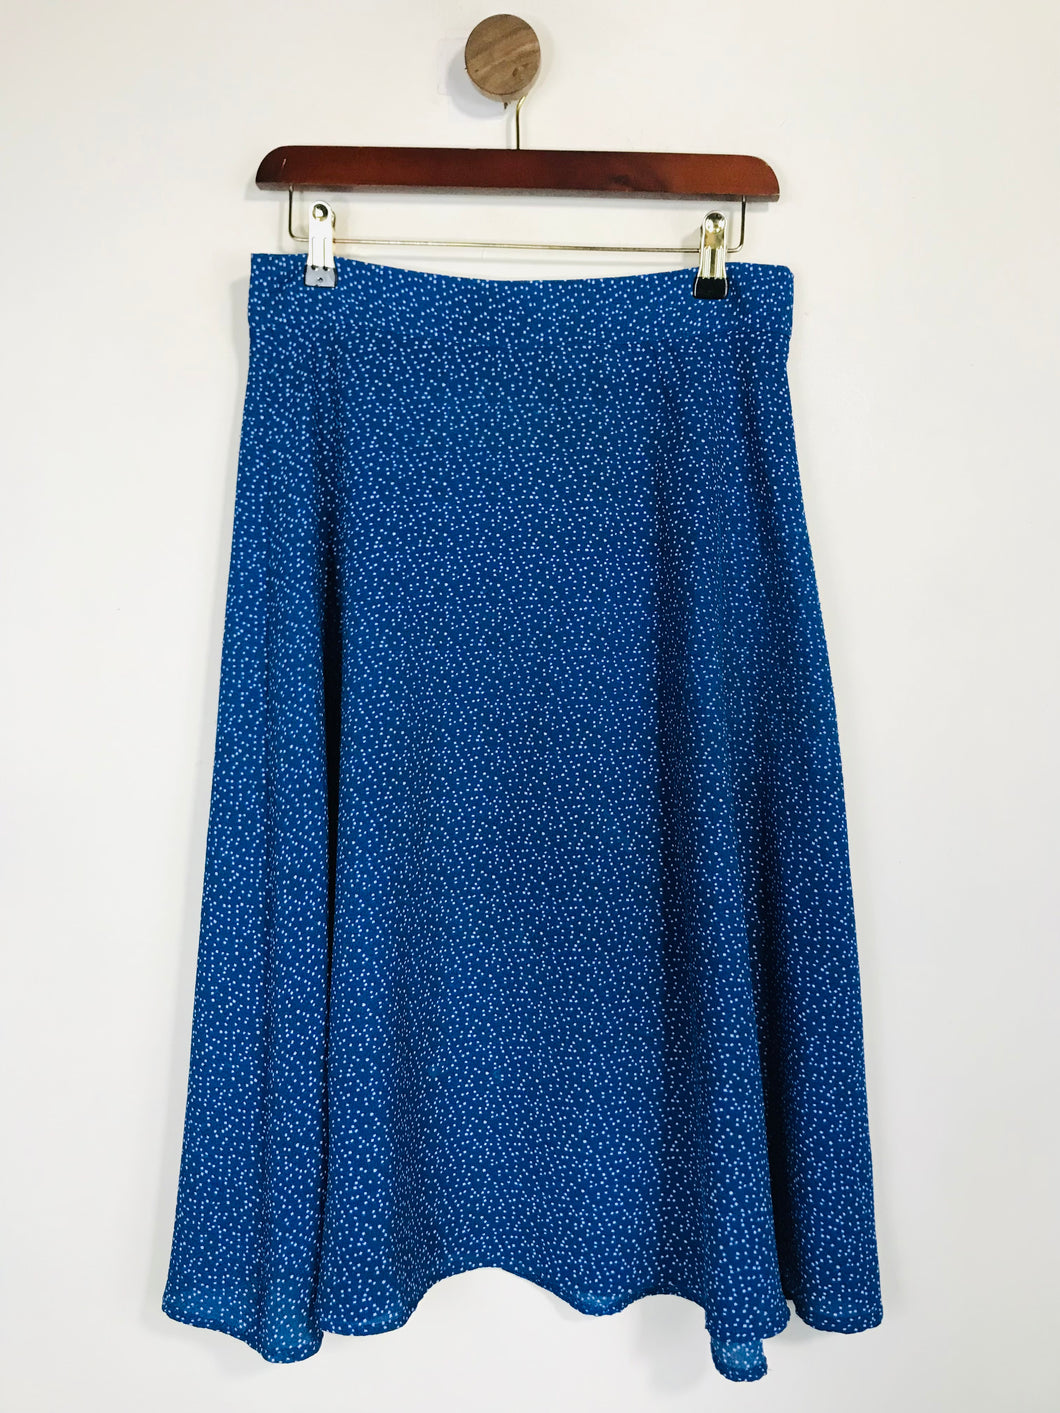 Øst Oest London Women's Polka Dot A-Line Skirt | M UK10-12 | Blue